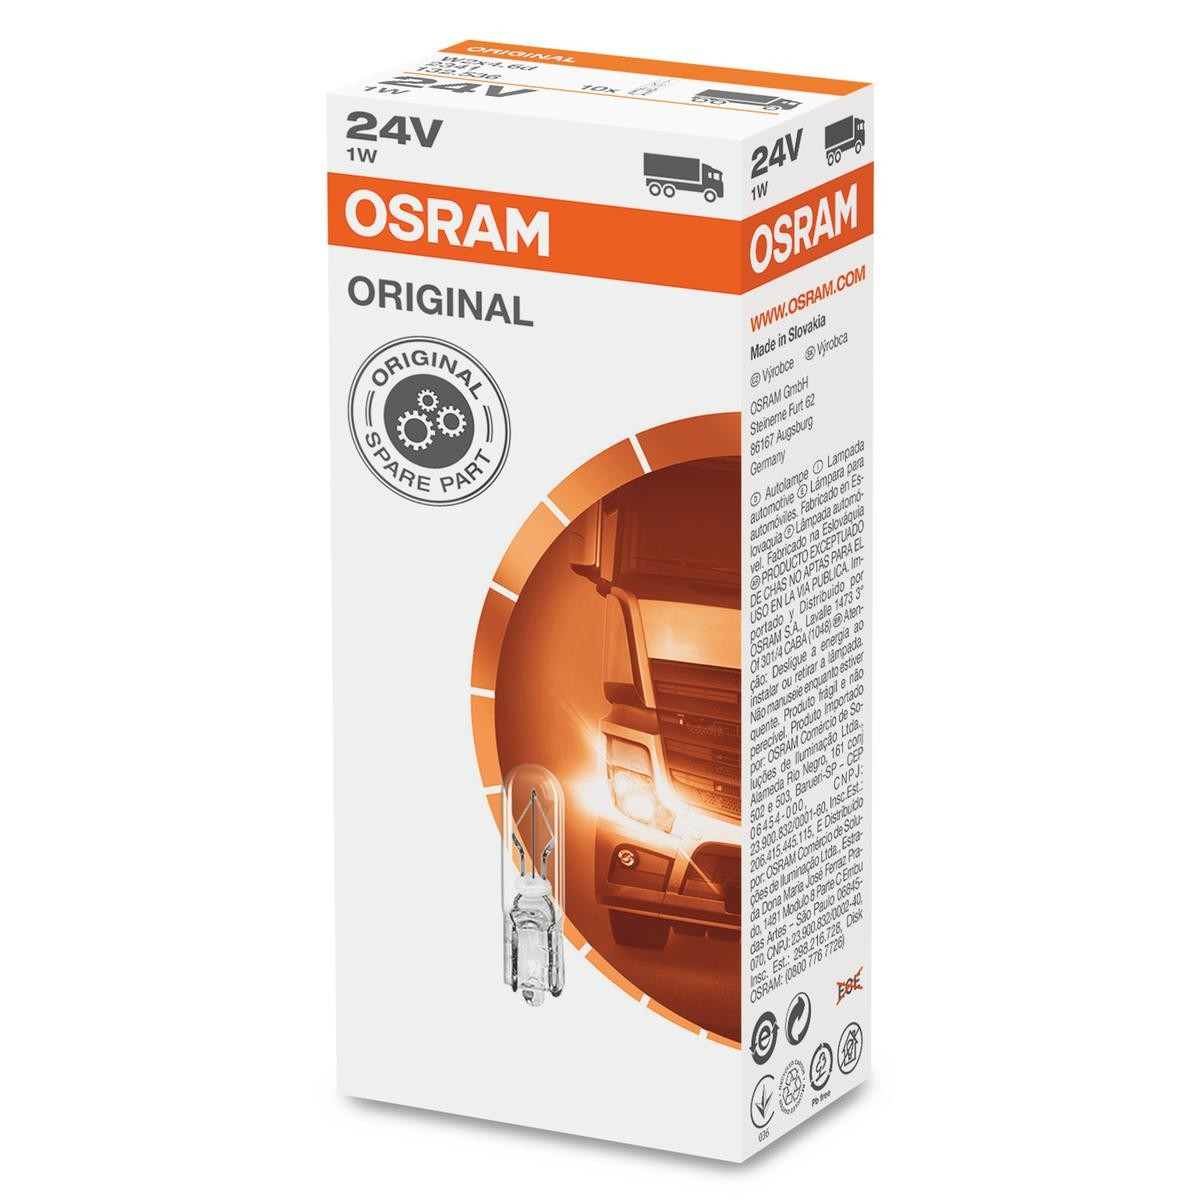 OSRAM ORIGINAL LINE Sockelglühlampe, 24V, 1W, ORIGINAL Glühlampe, Innenraumleuchte 2341 kaufen